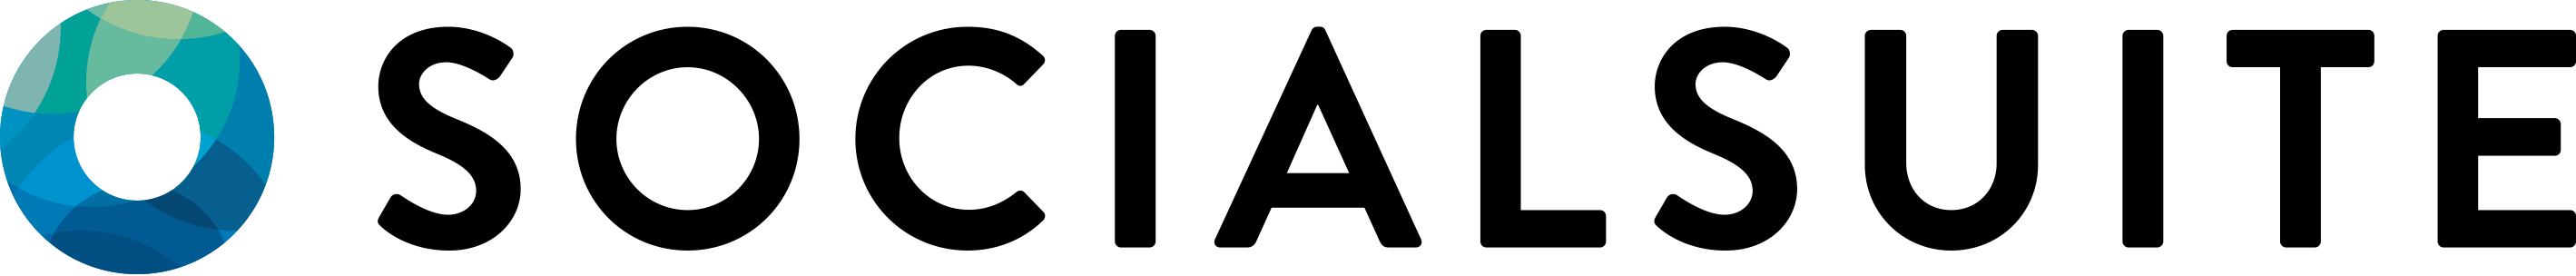 Socialsuite logo